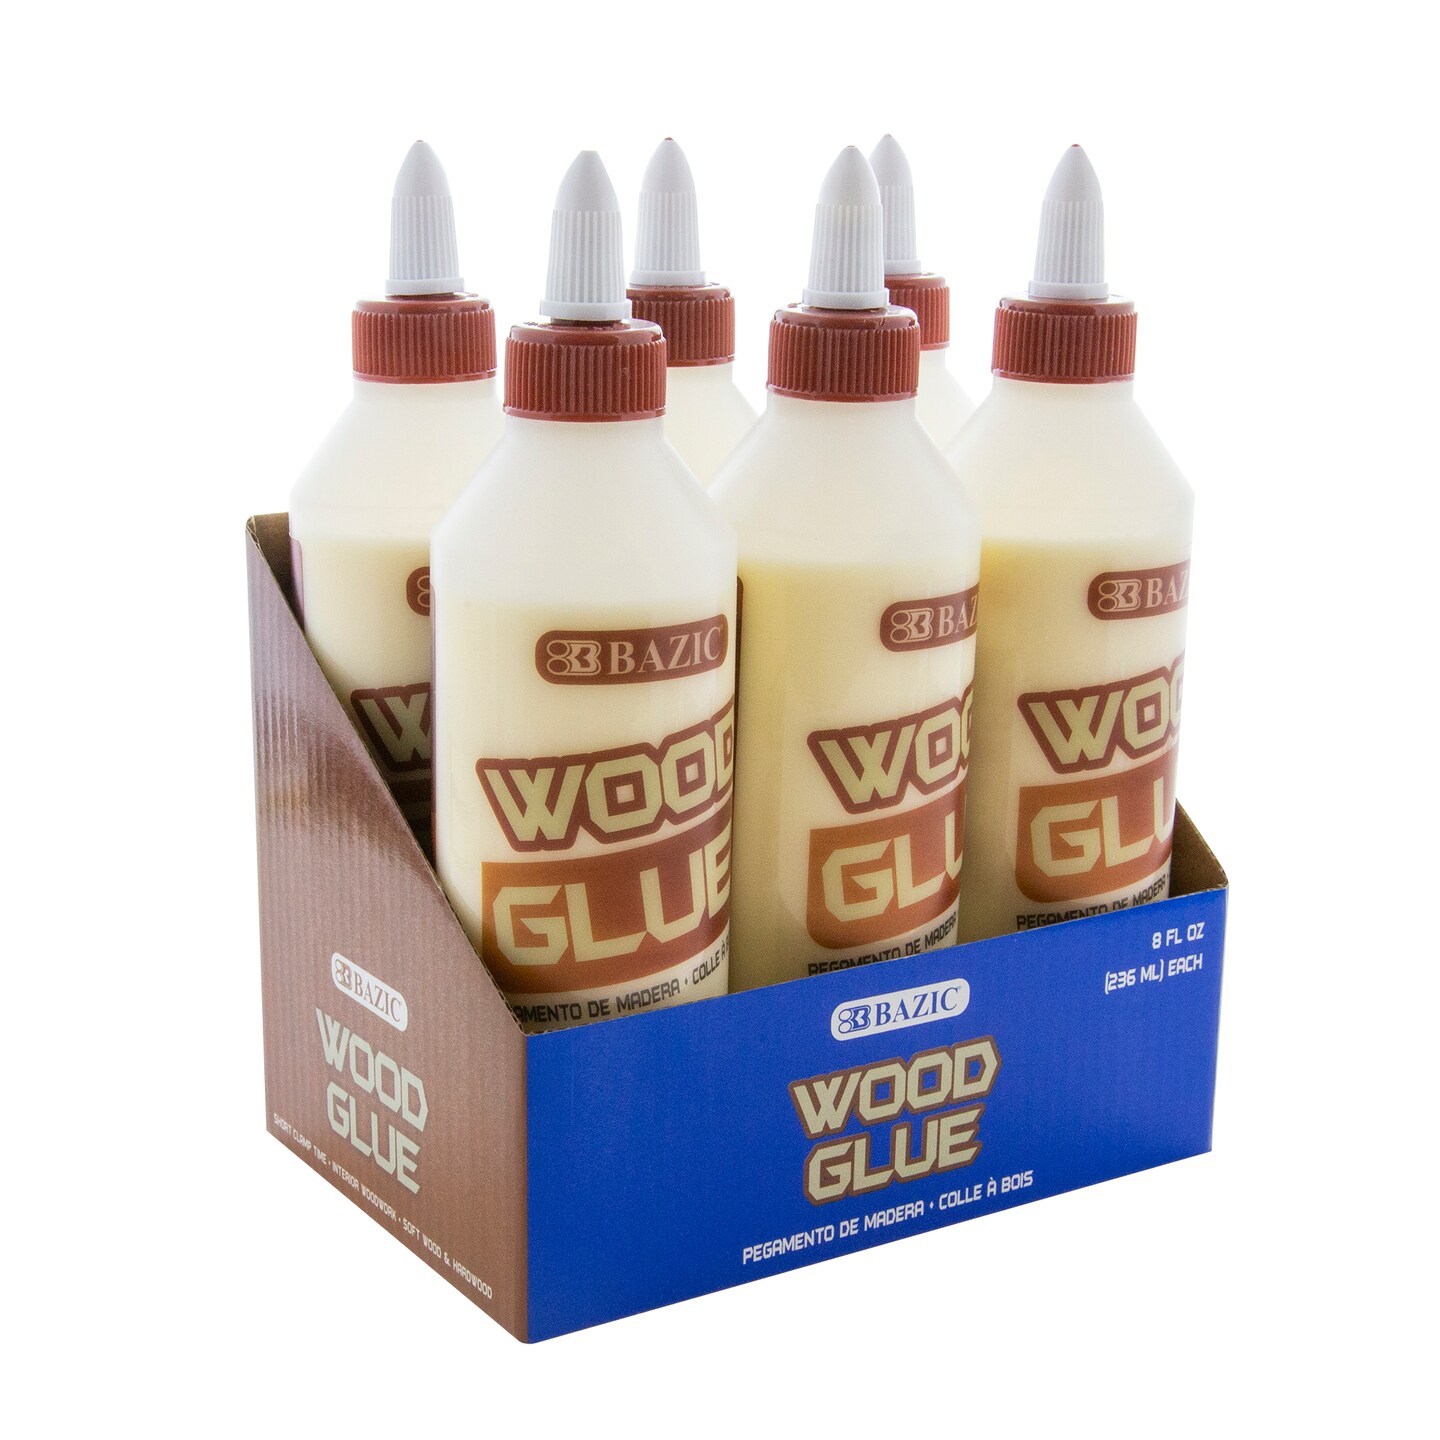 BAZIC Wood Glue Jumbo 7 5/8 FL OZ (236 mL) w/ PDQ Display